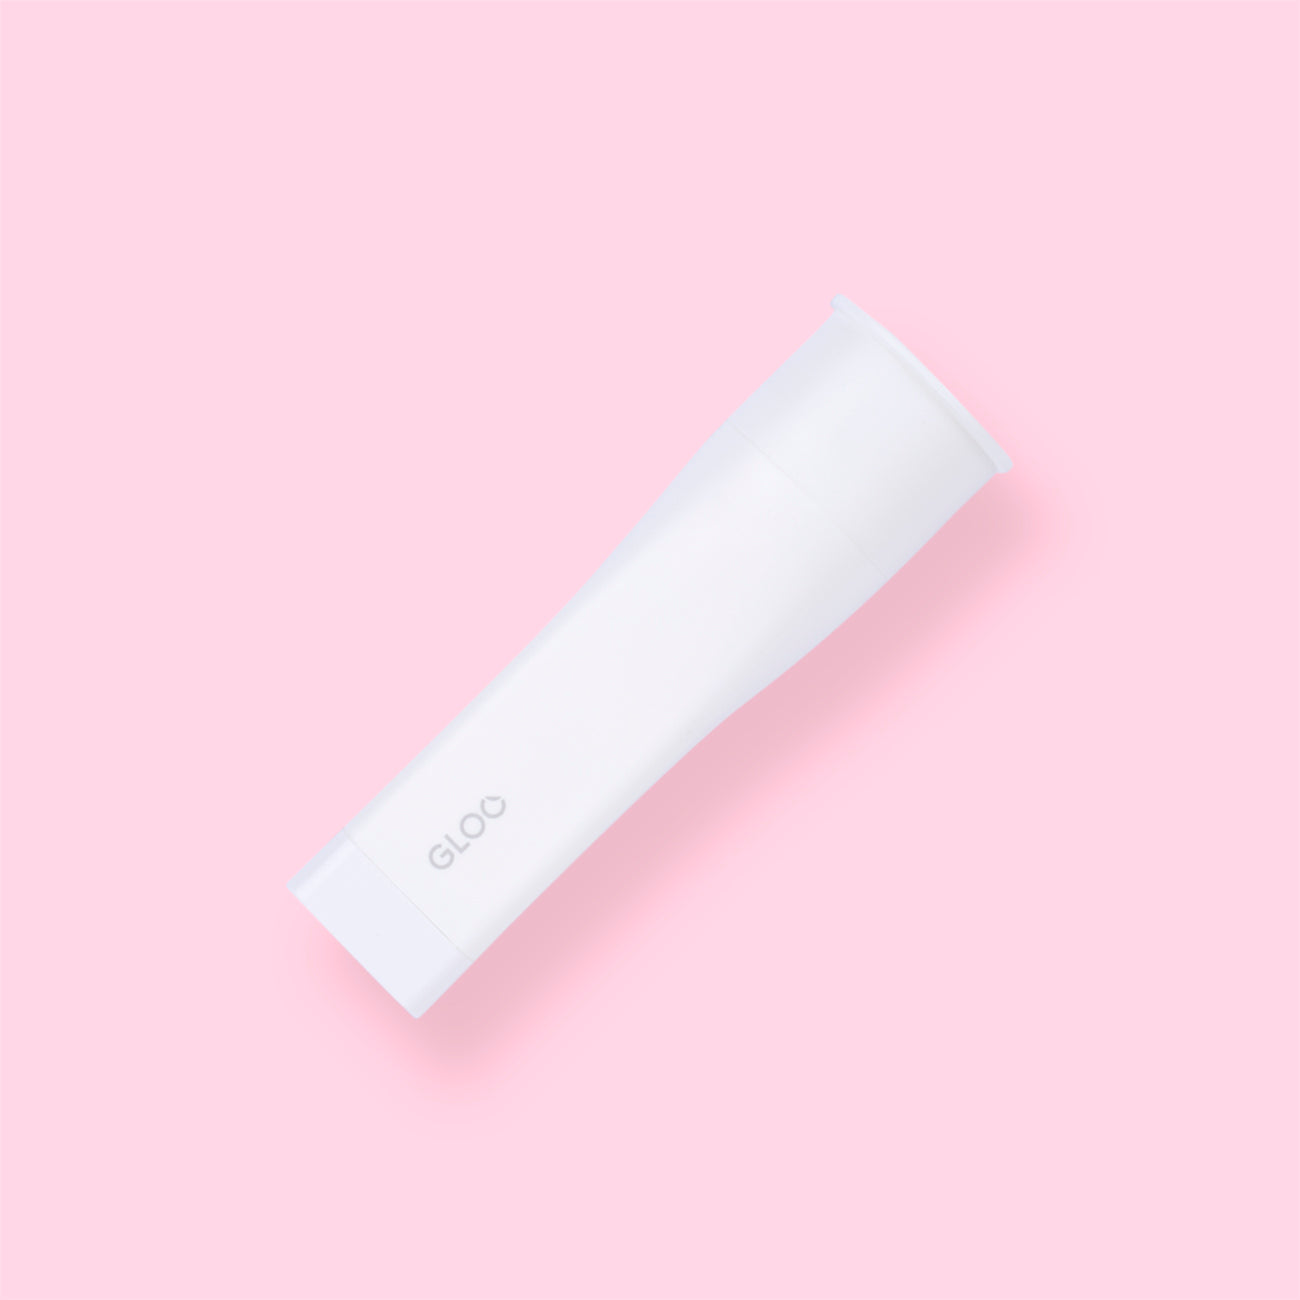 Kokuyo Gloo Glue Stick - Medium - White